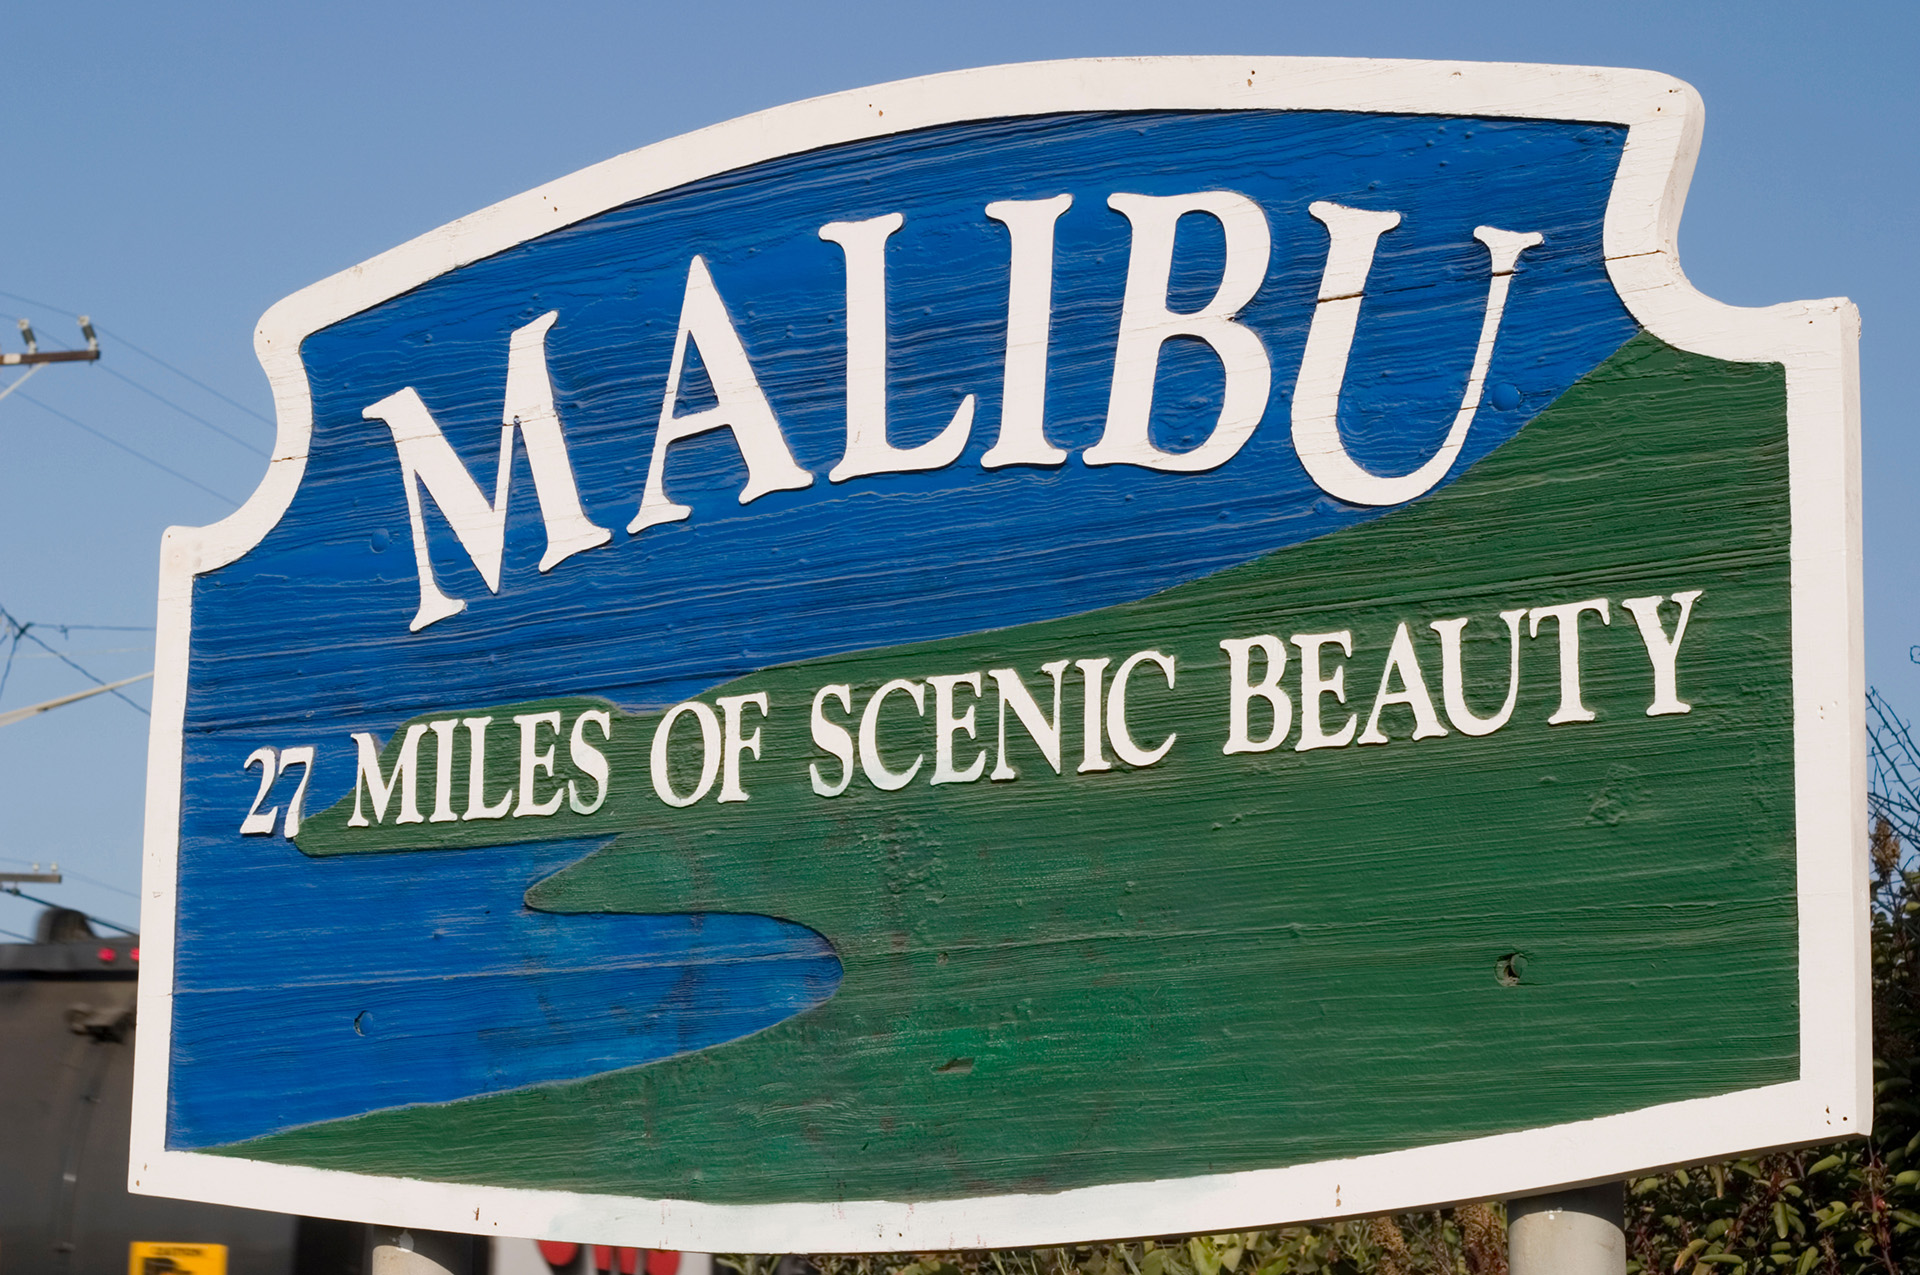 Valet Parking Service in Malibu, CA | American Valet Parking Response